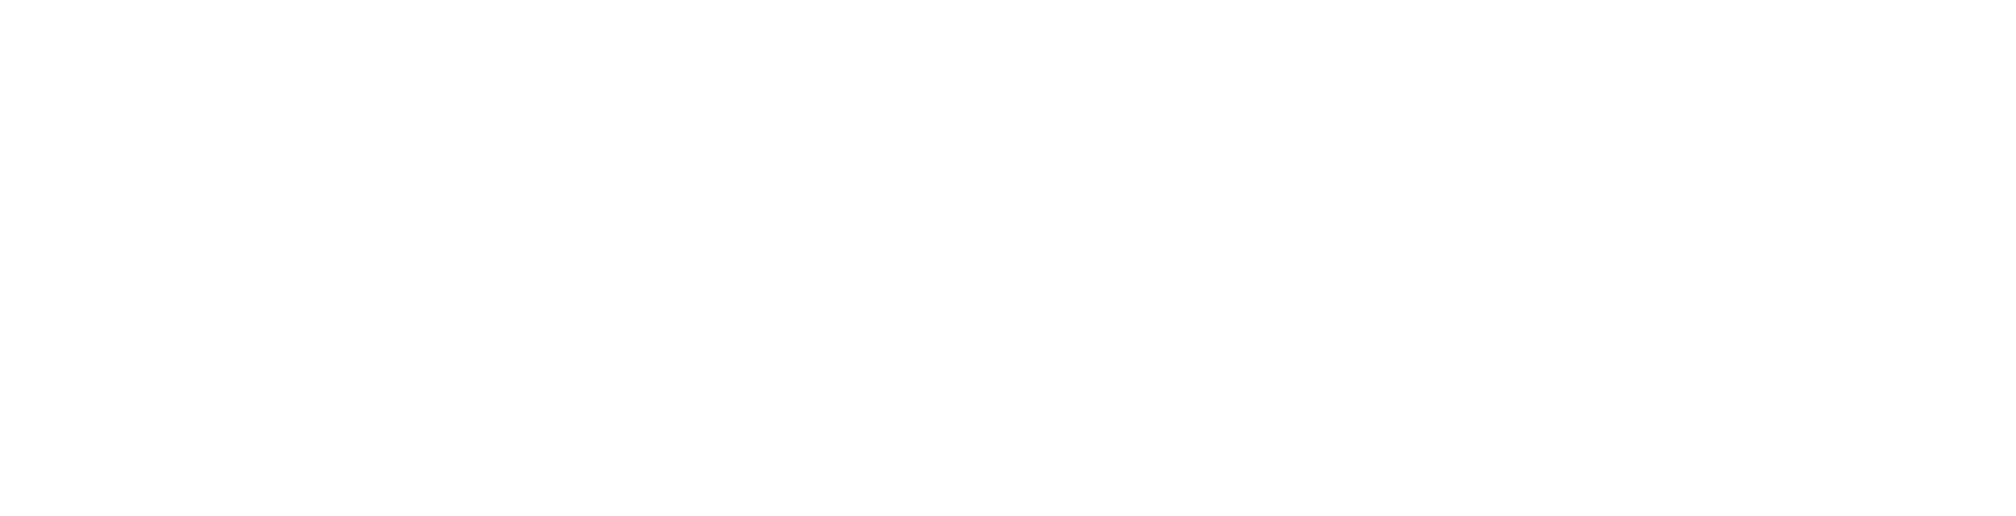 Moovin Festival Logo